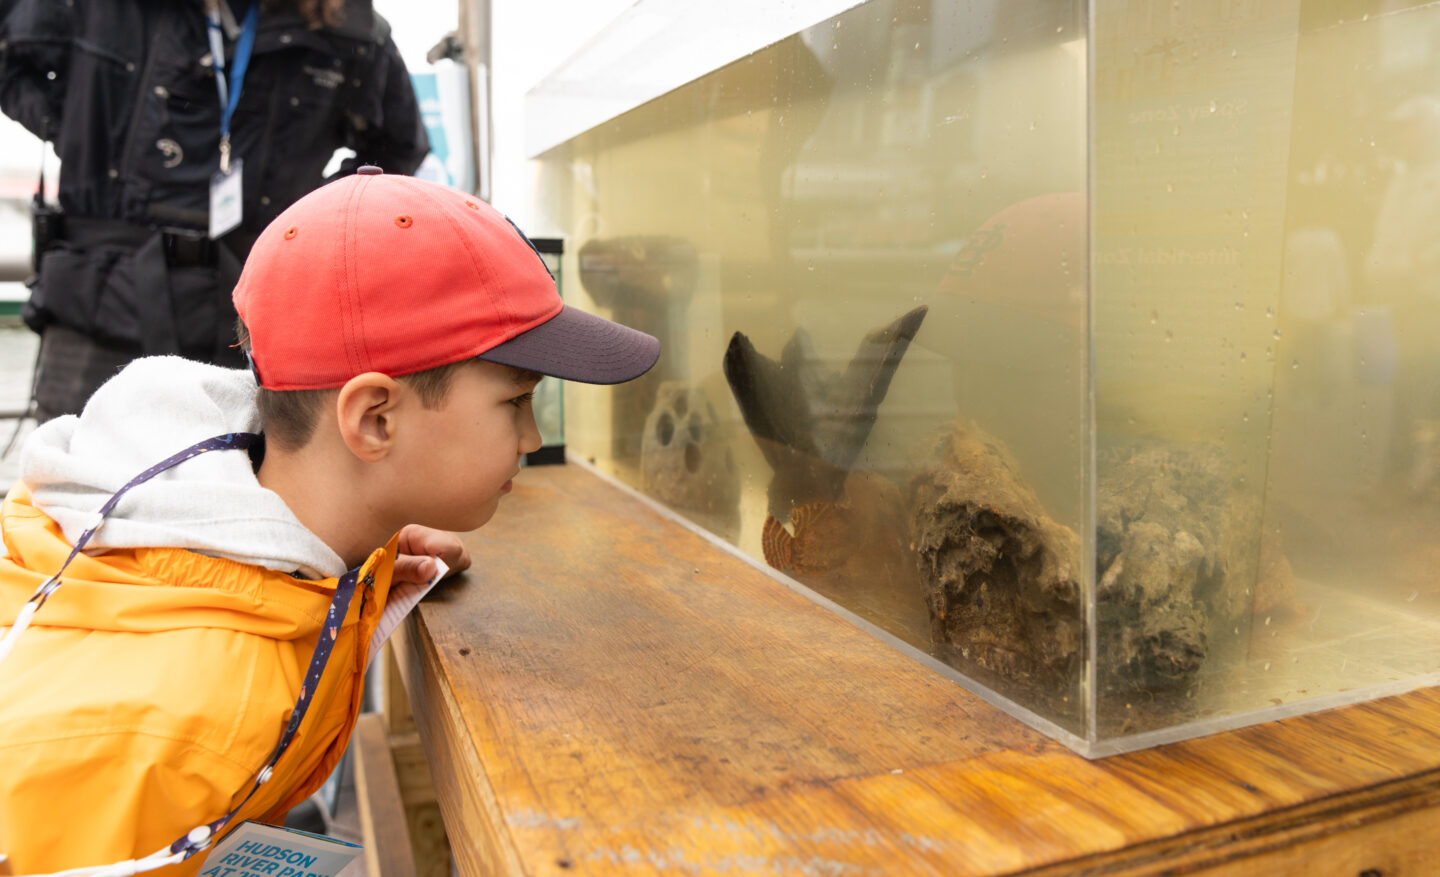 A boy looks into an aquarium tank with Hudson River wildlife inside